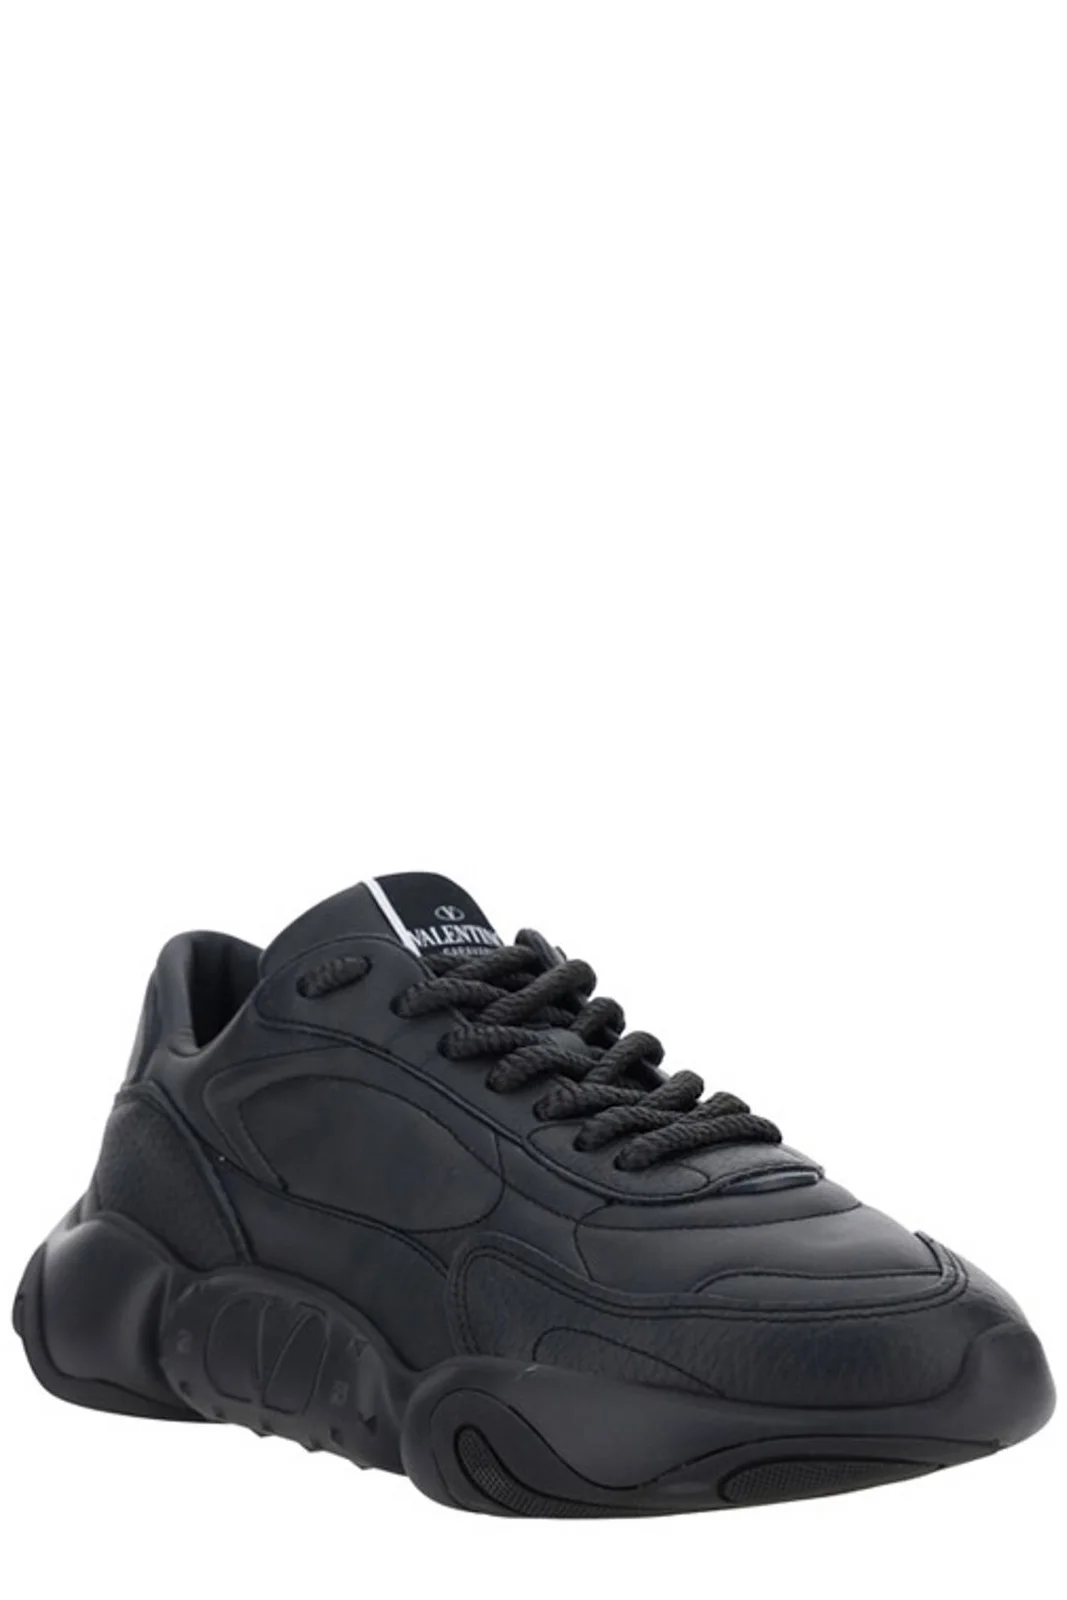 Valentino Black Calf Leather Garavani Sneakers • Brands Outlet